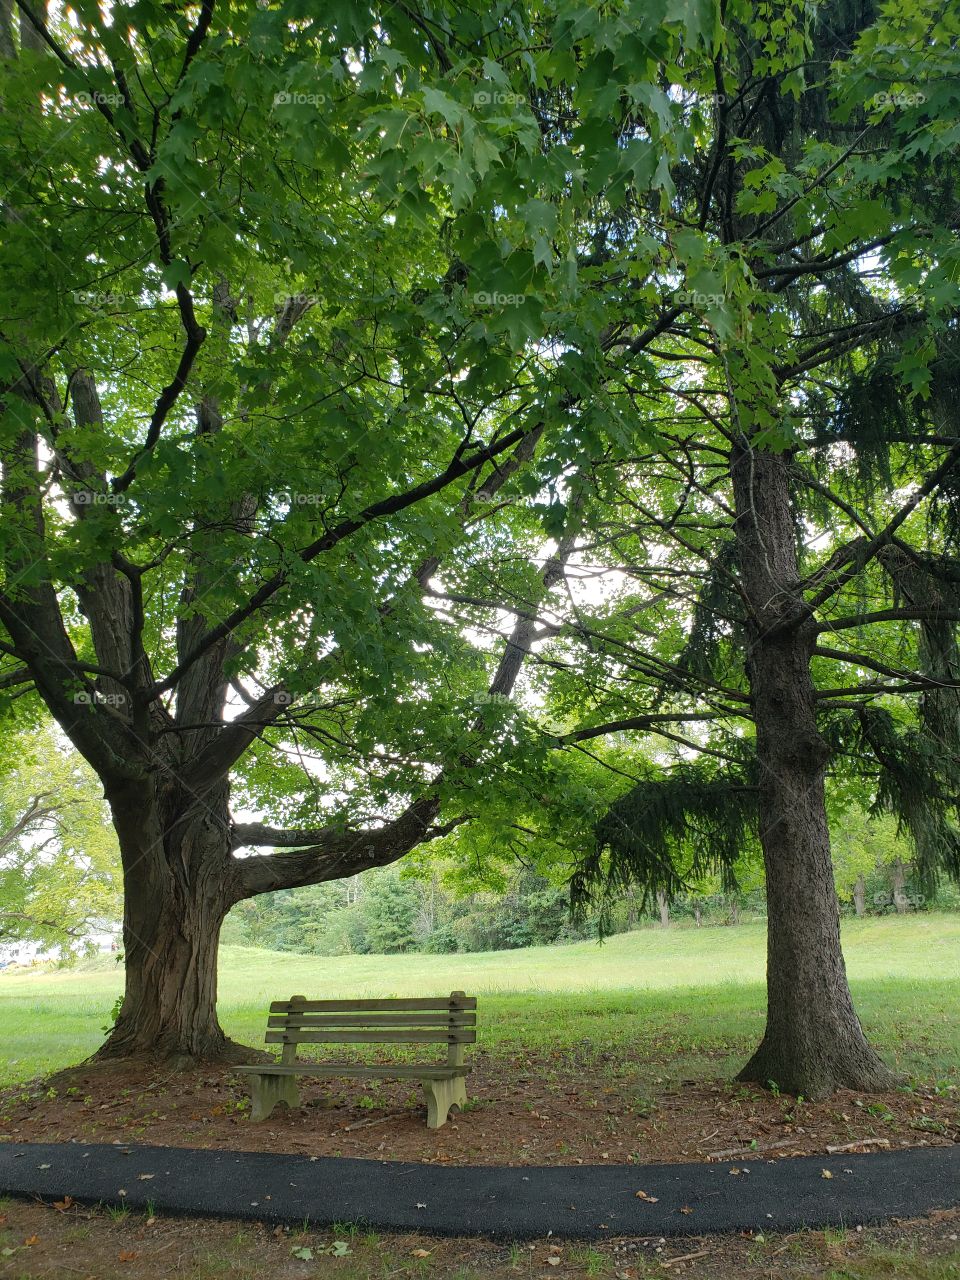 Bench among trees